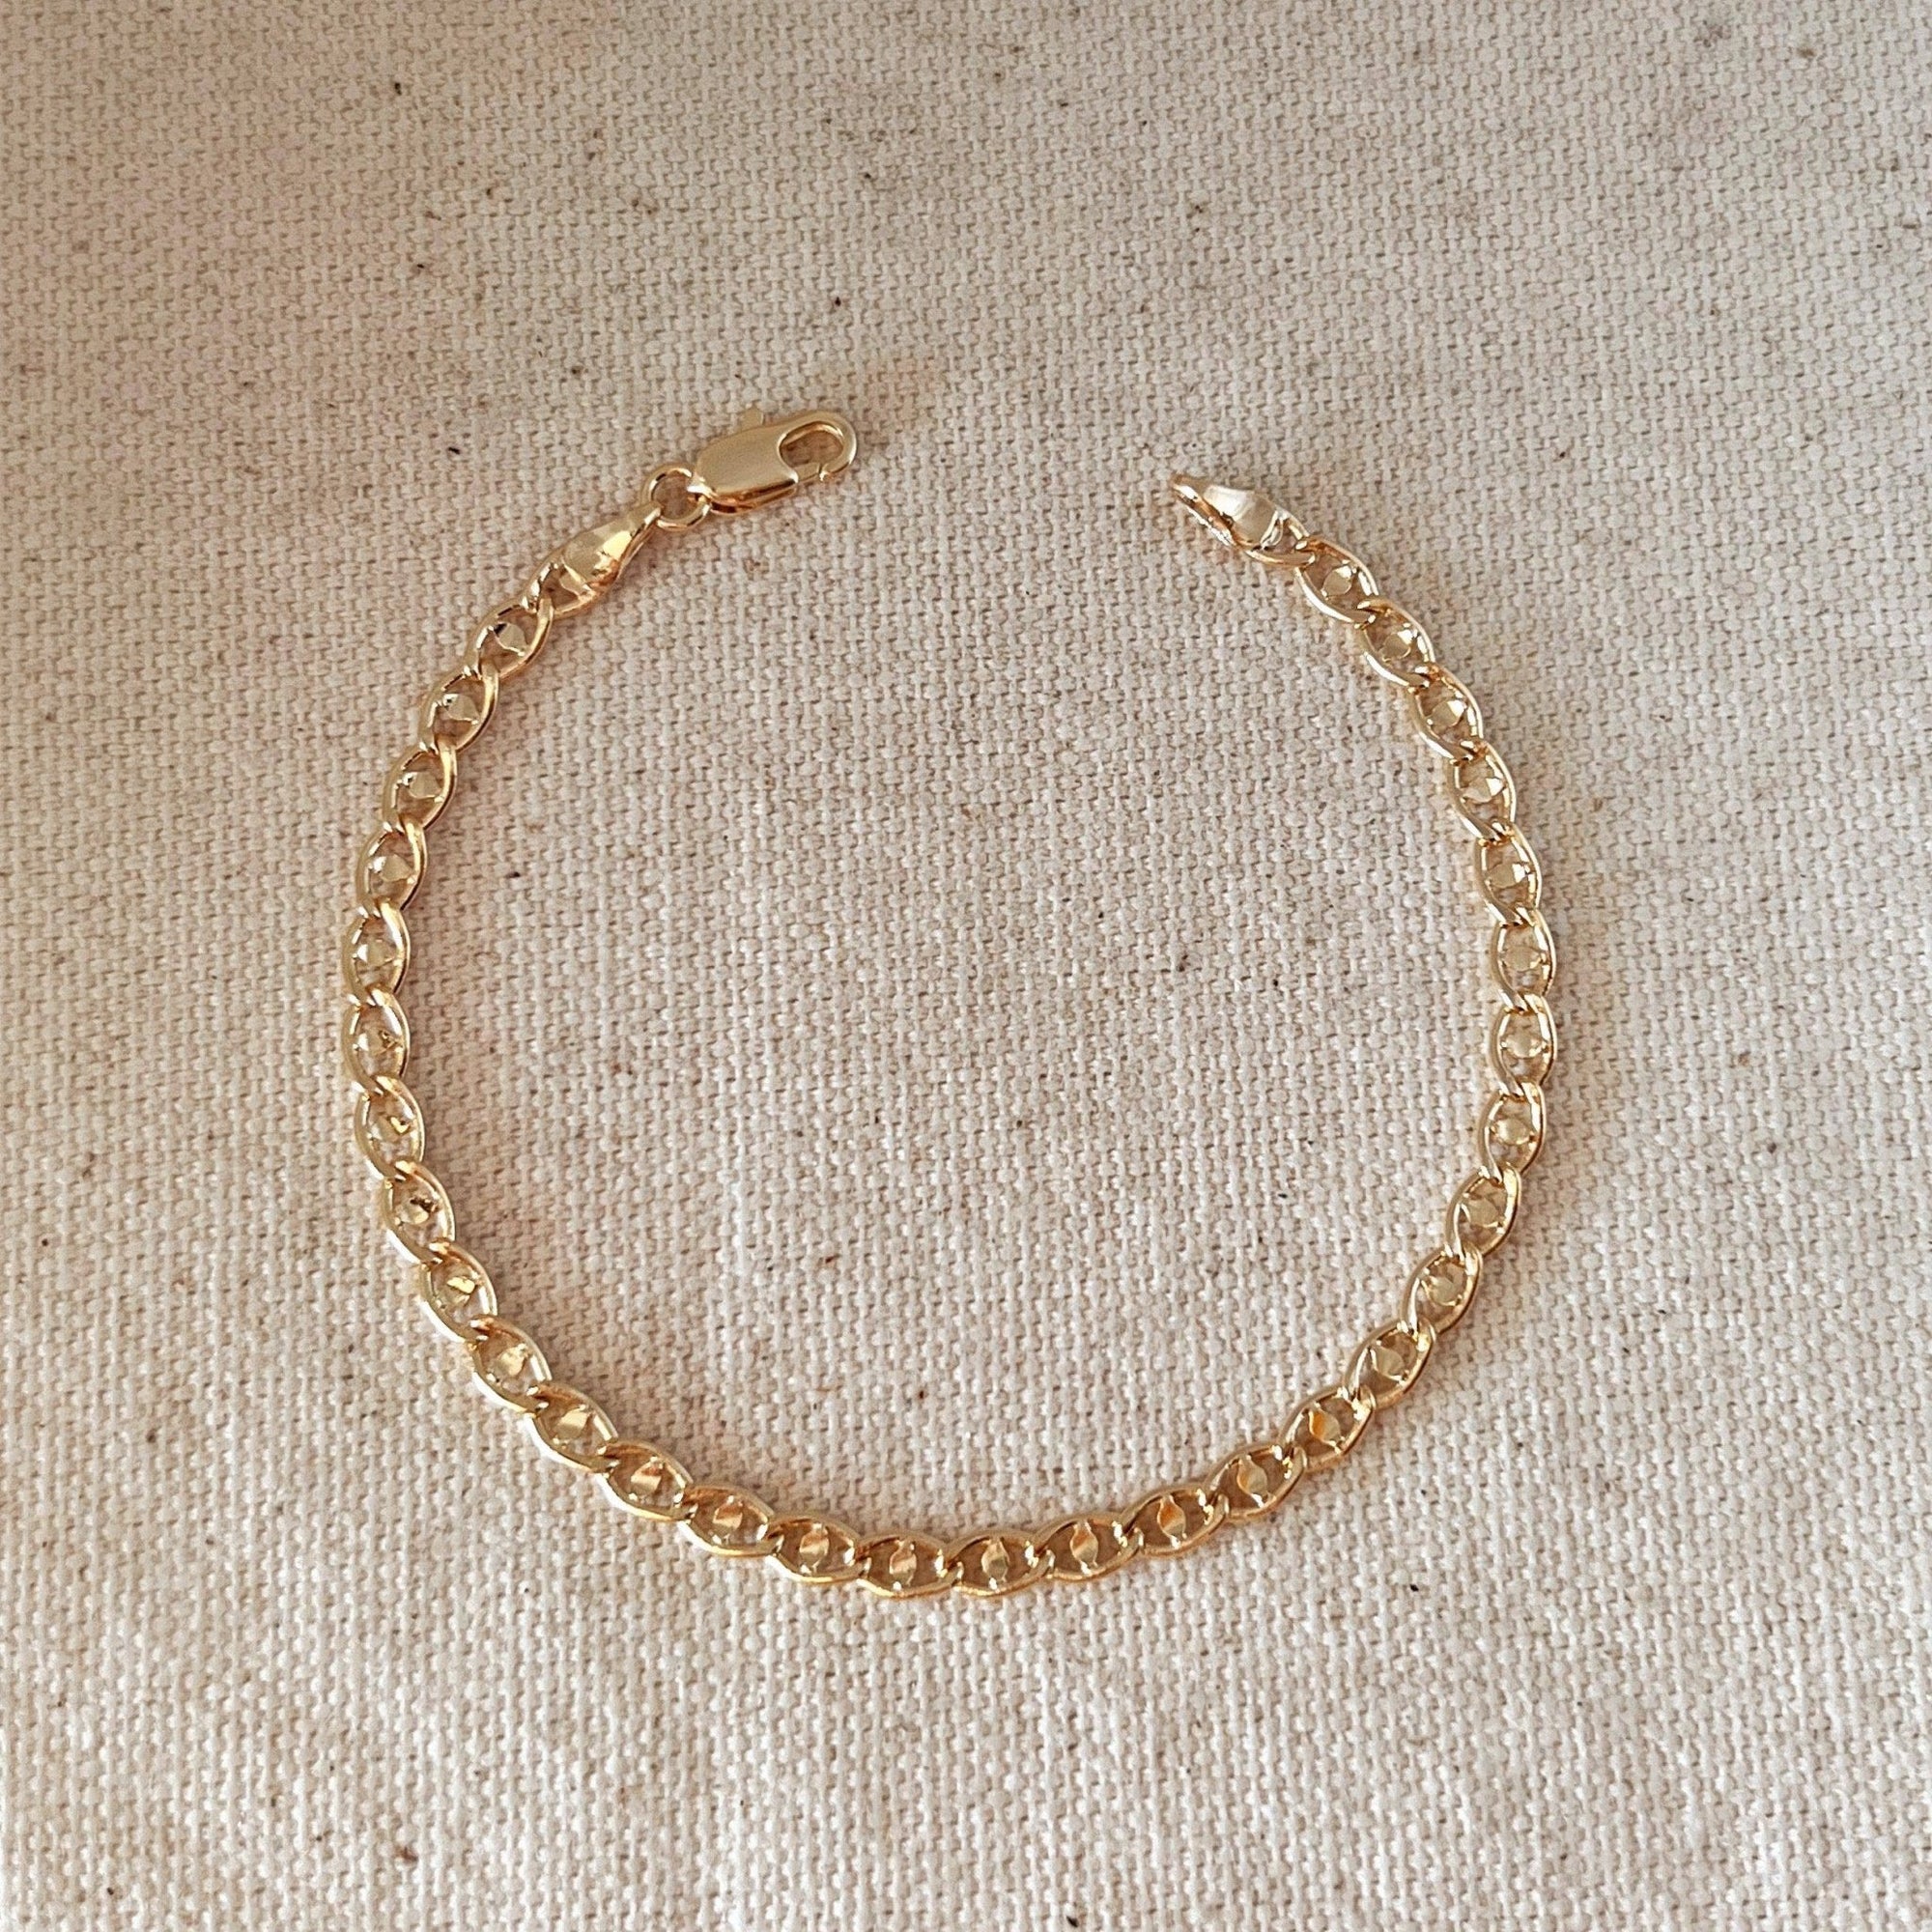 Mariner Bracelet, 18k Gold Filled, Abigail Fox - Abigail Fox Designs